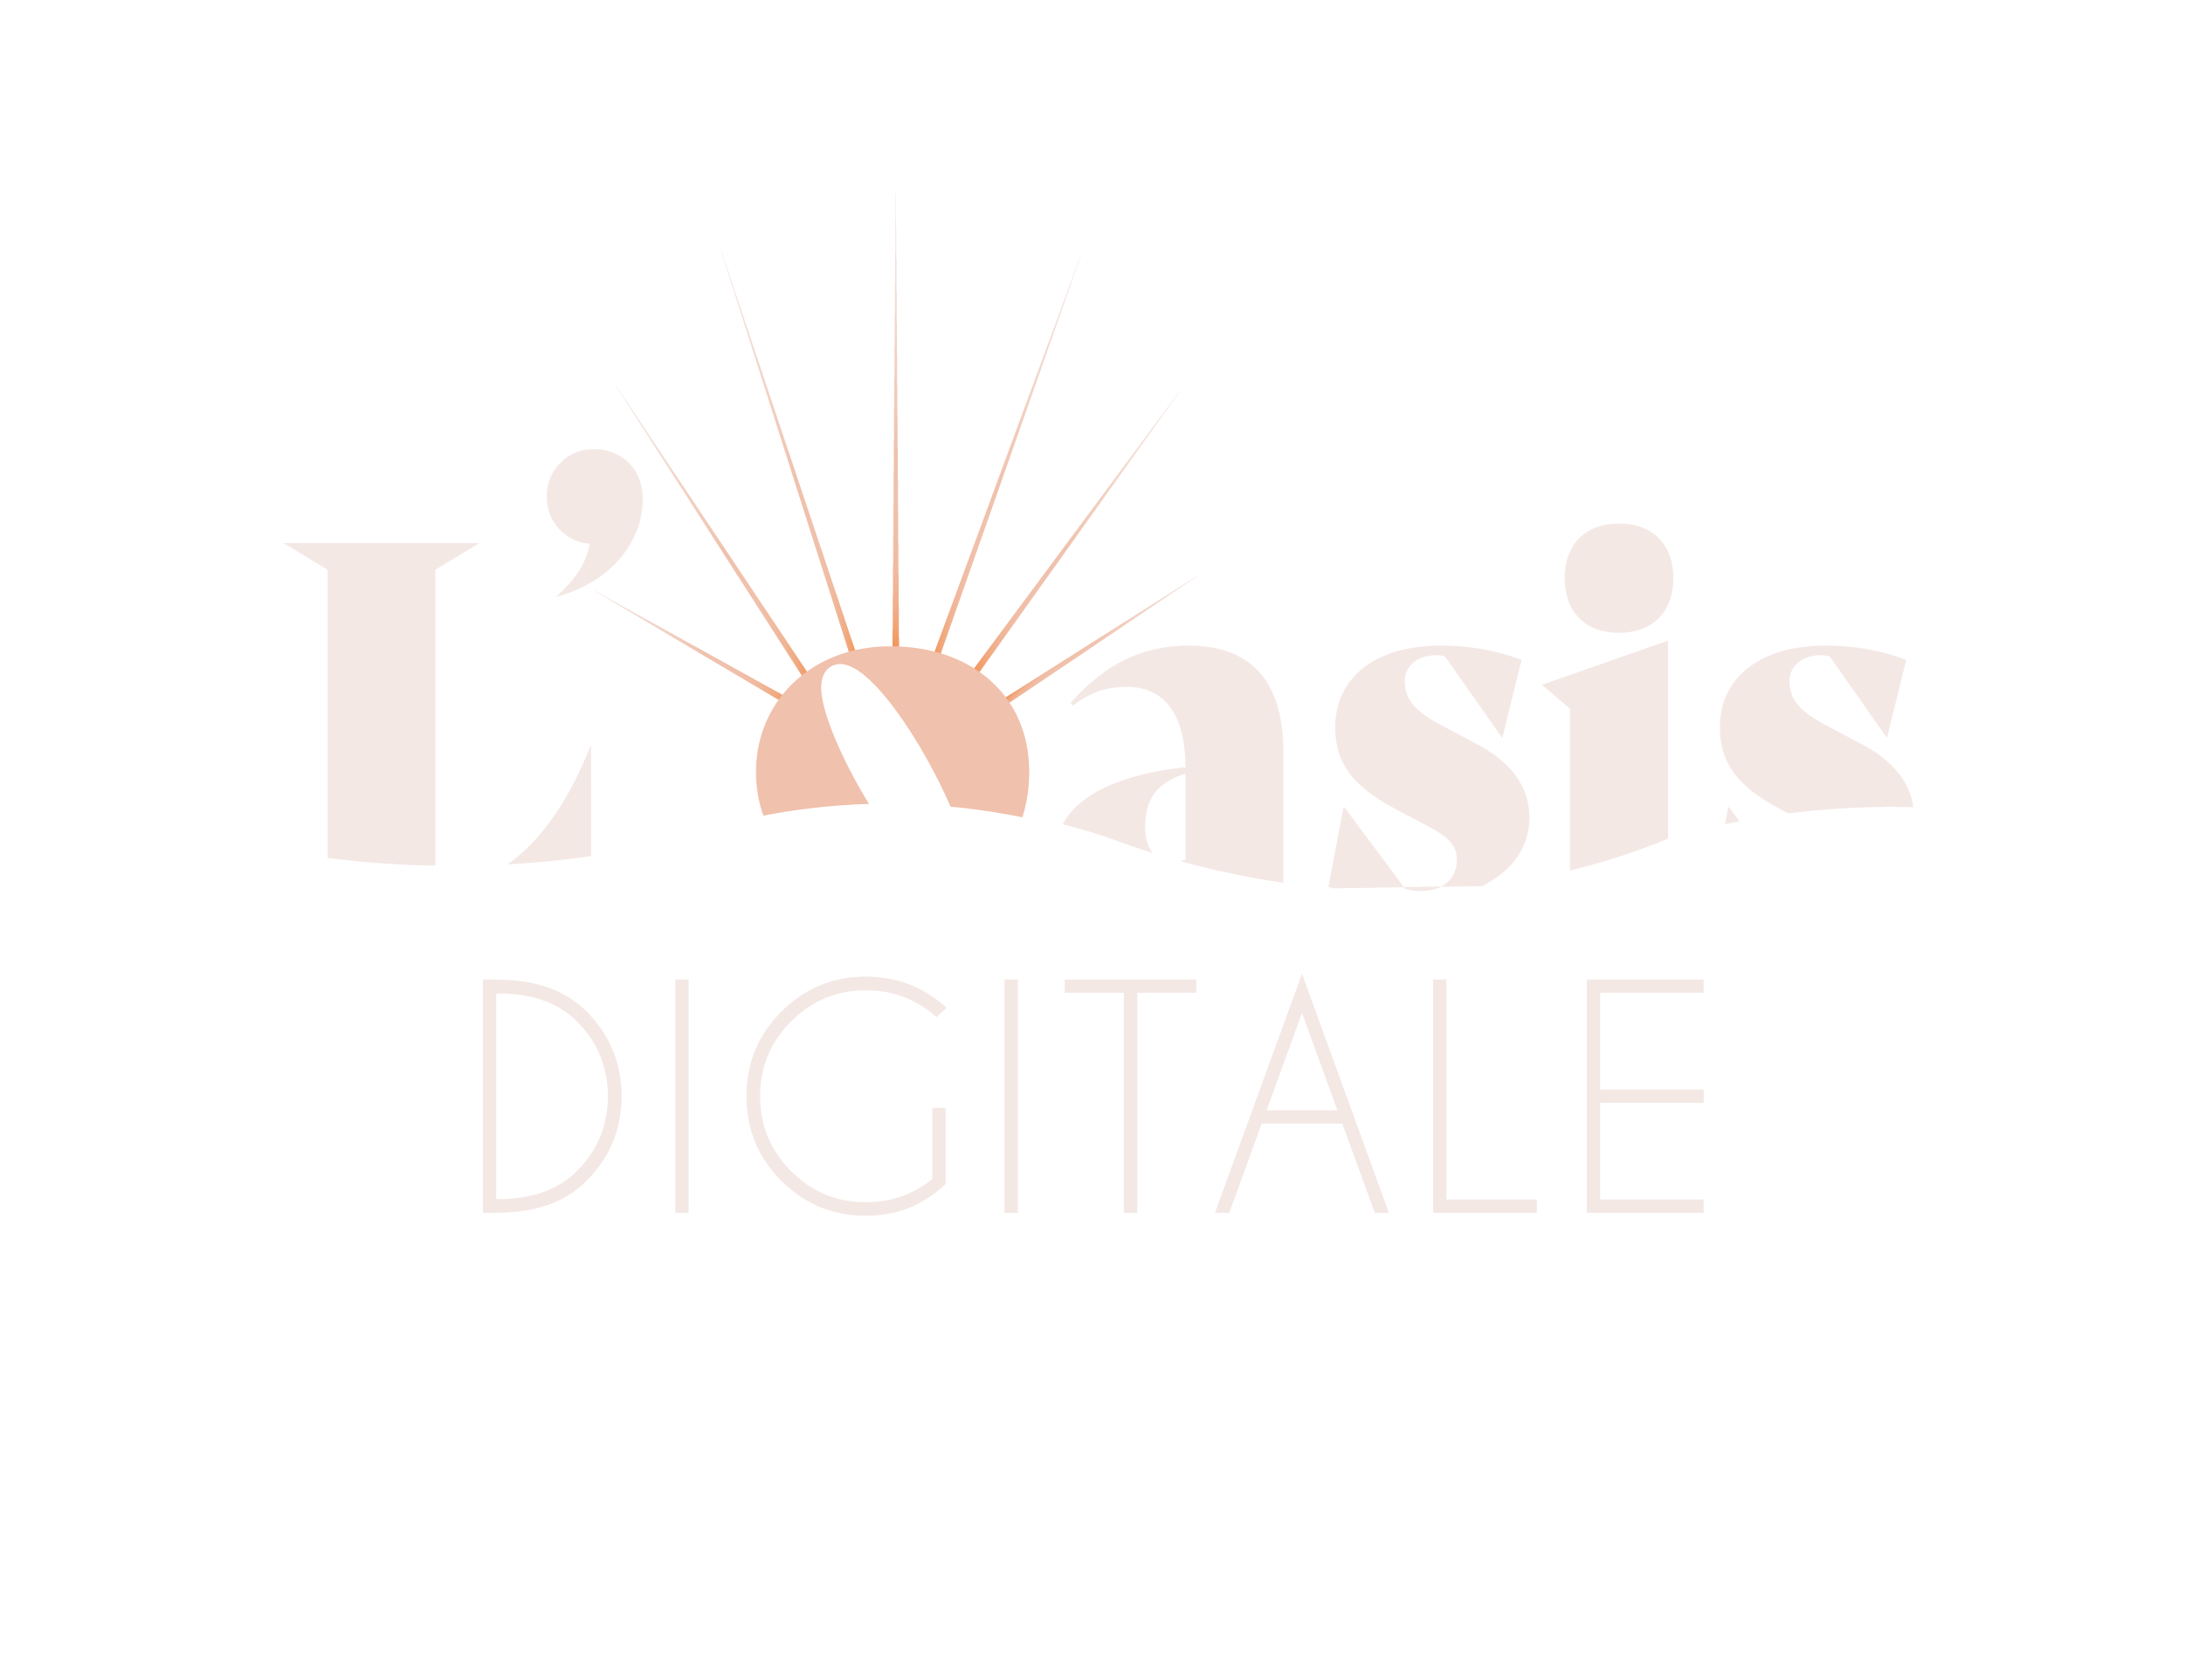 L'oasis digitale